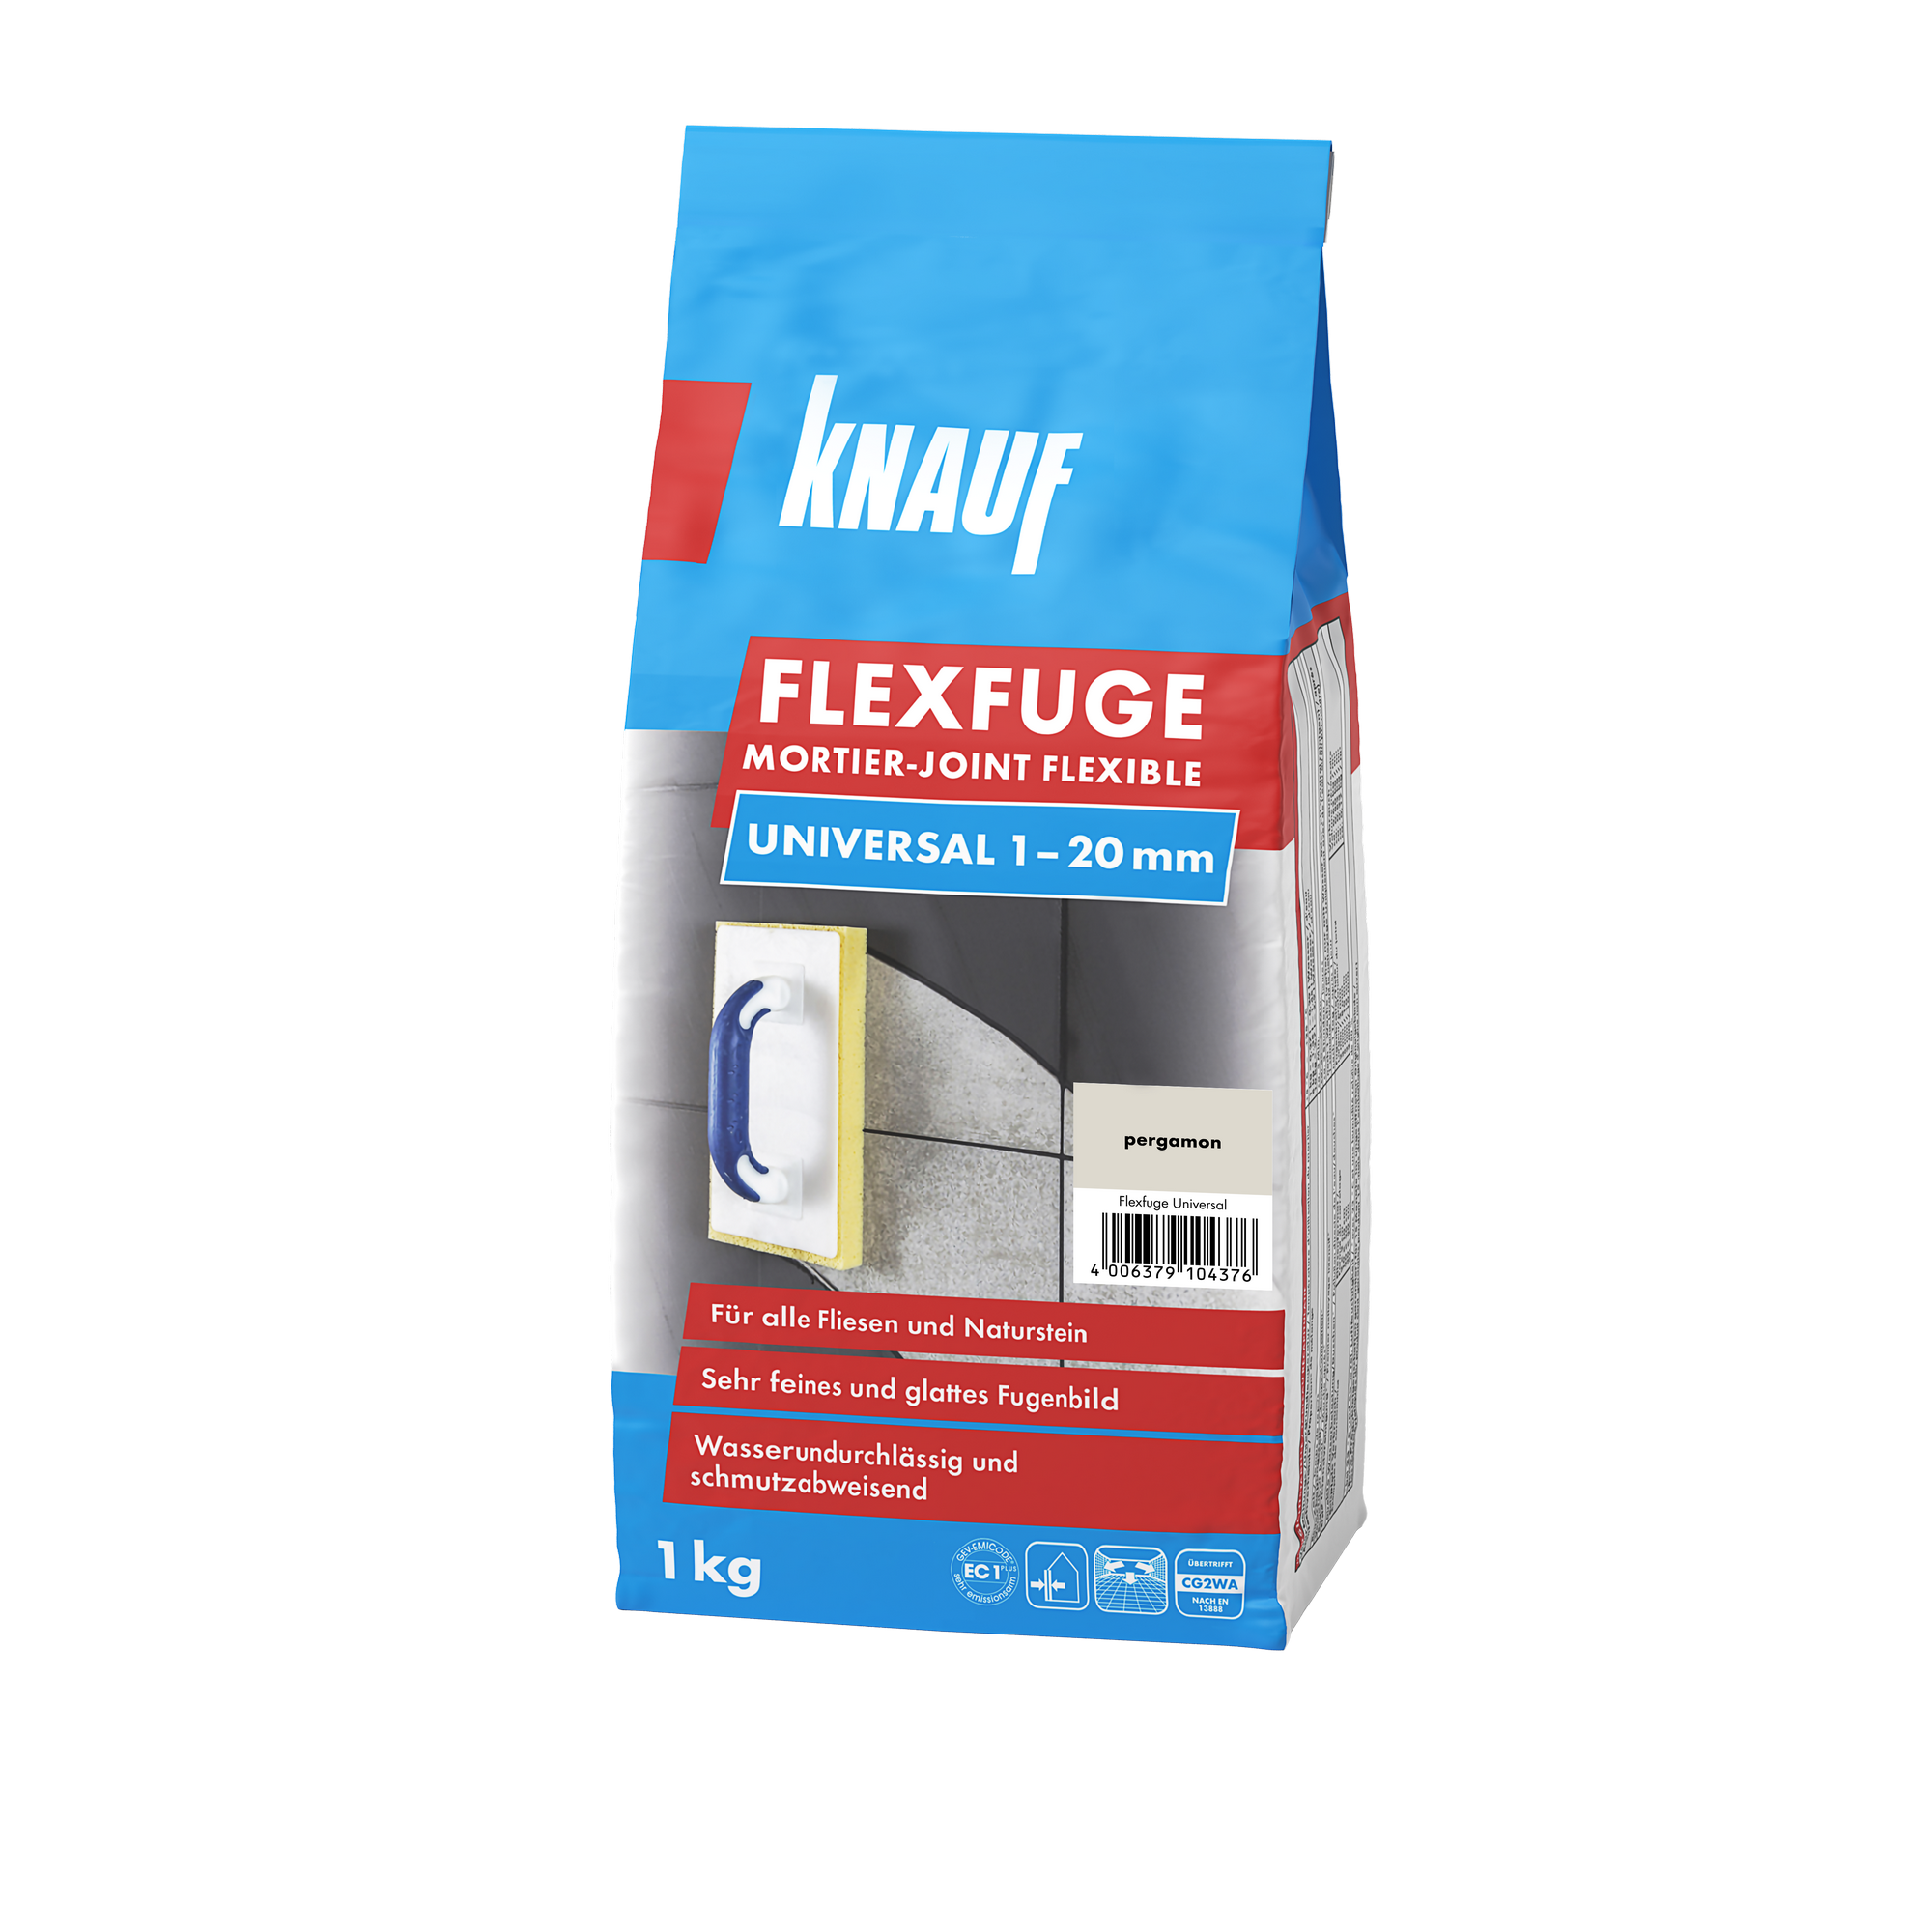 Flexfuge 'Universal' pergamon 1 kg + product picture